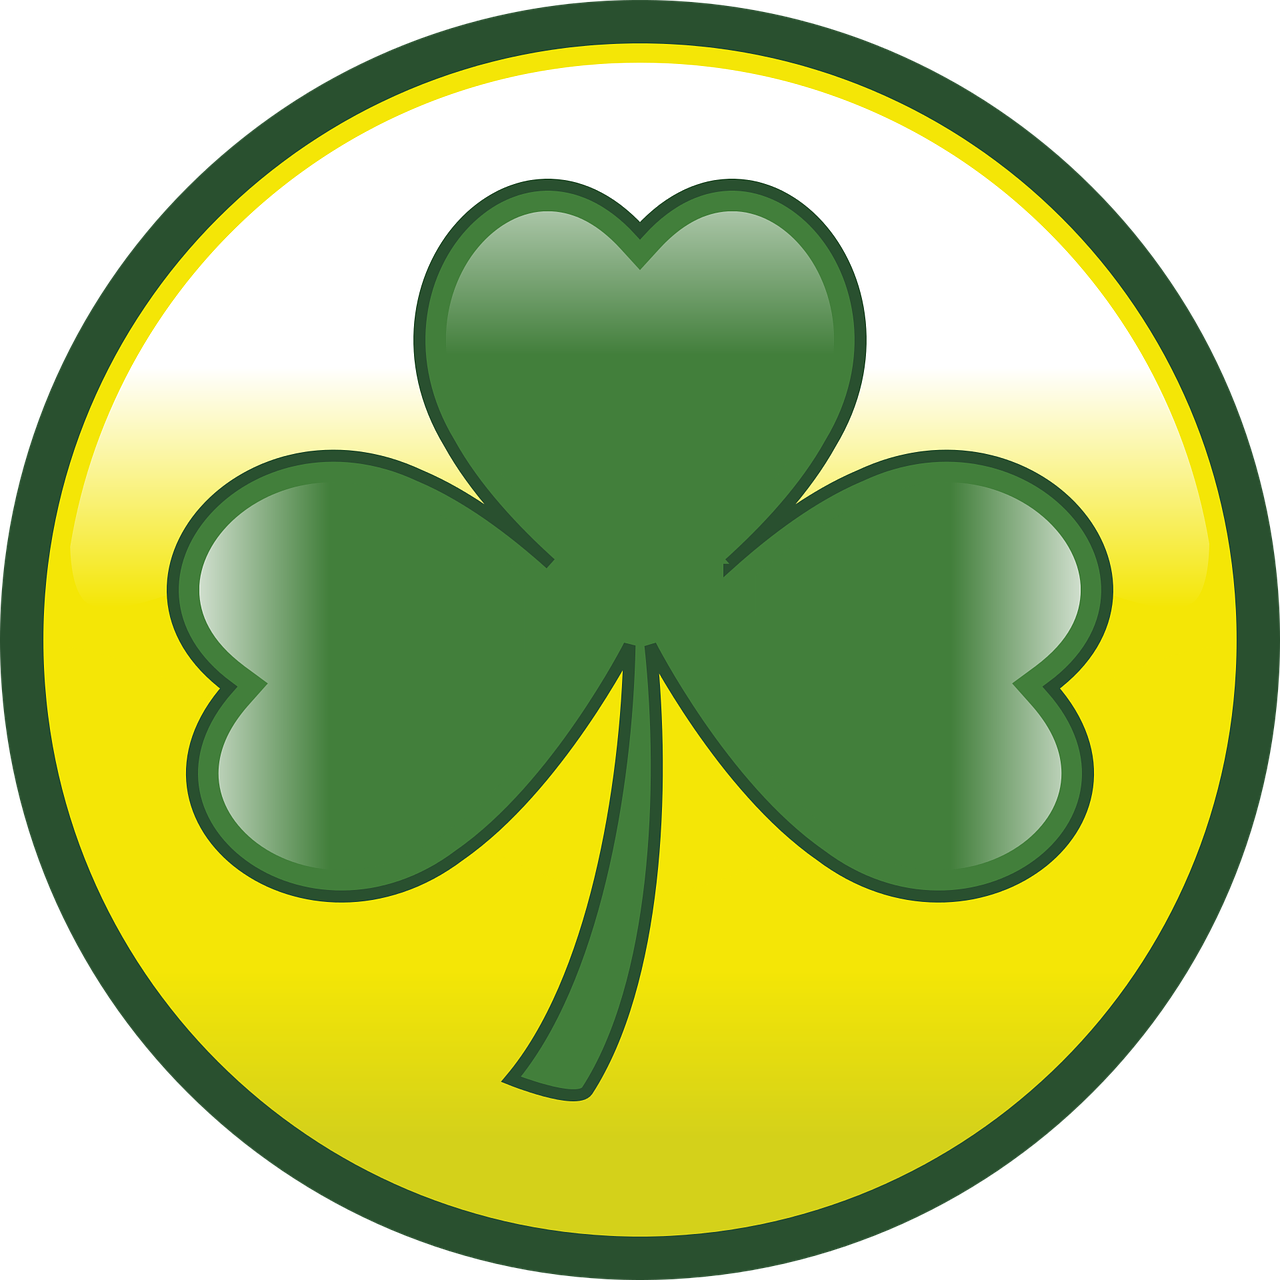 St Patricks Day Shamrock Clover  - REDQUASAR / Pixabay